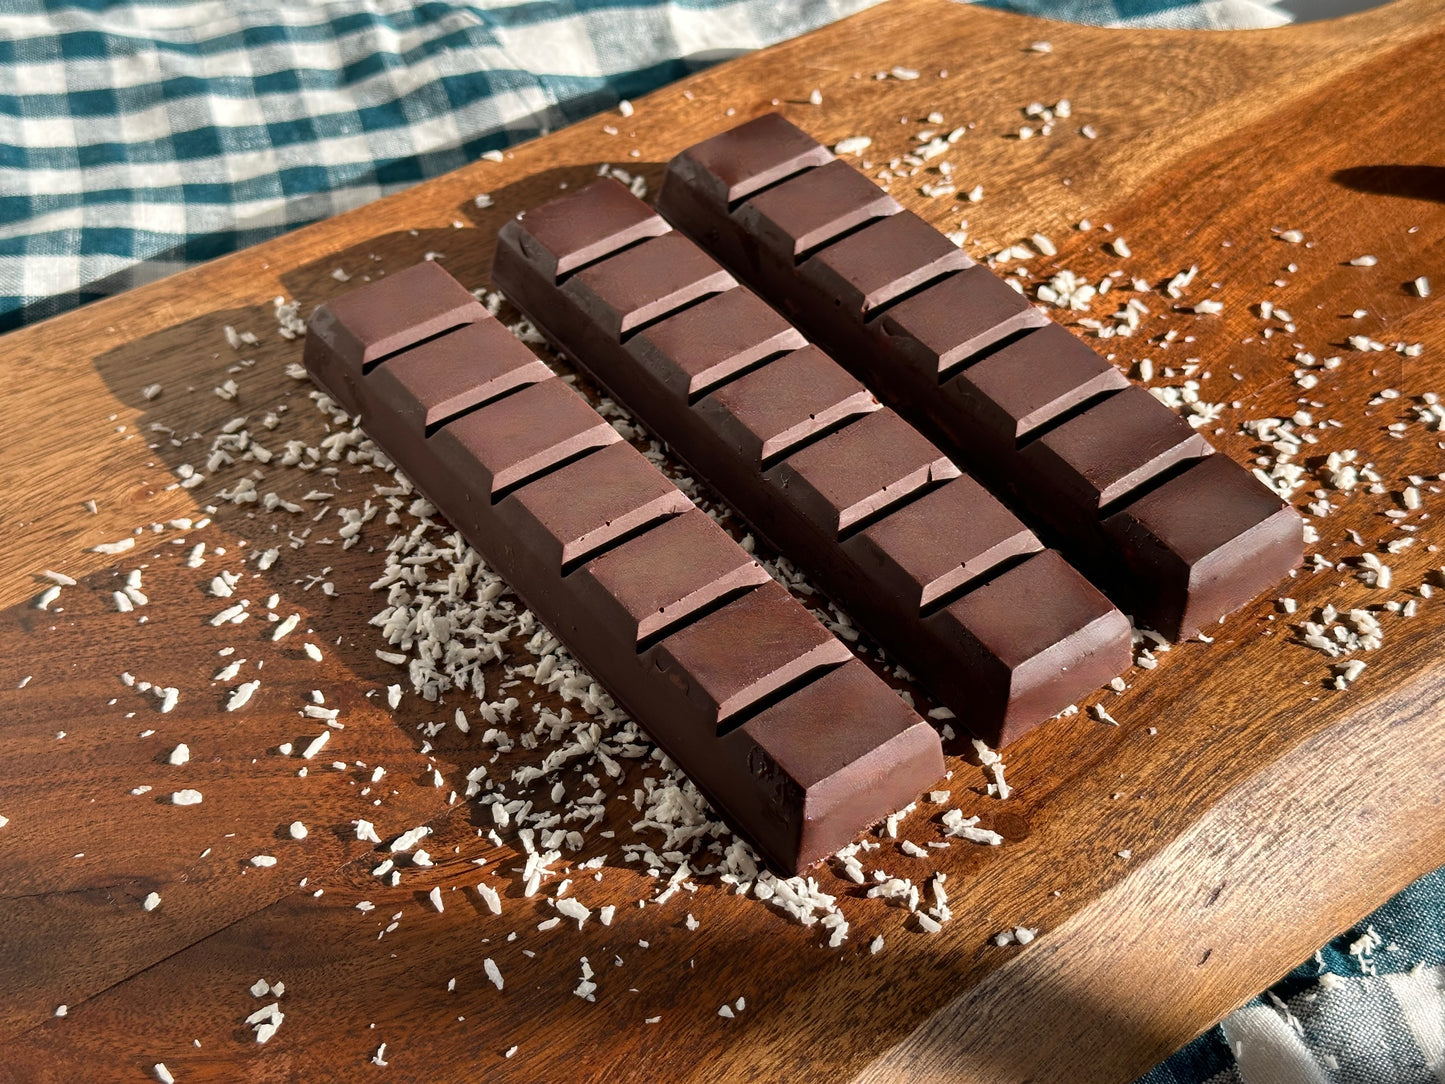 Mild Addictions Organic Dark Chocolate with a Medjool Date Center - Coconut Flavor